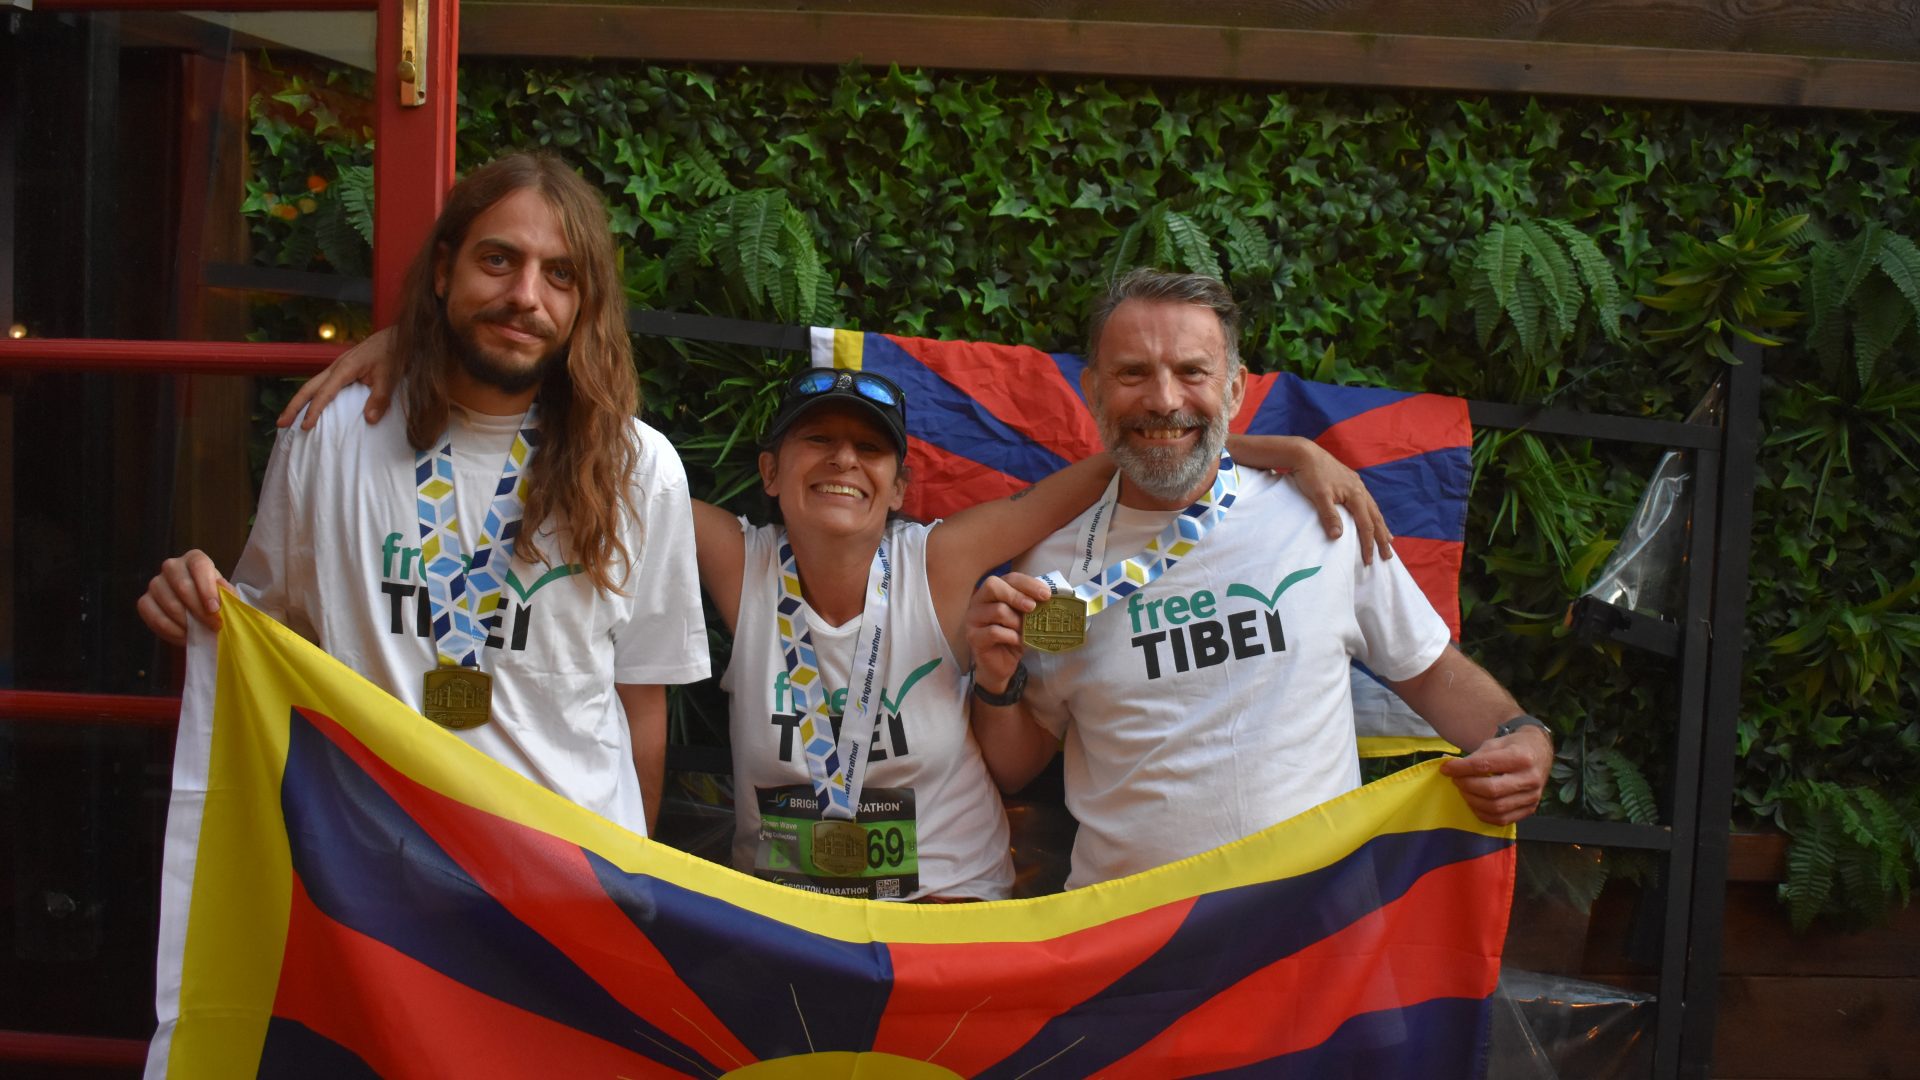 Team Tibet - Free Tibet's Brighton Half Marathon 2021 runners